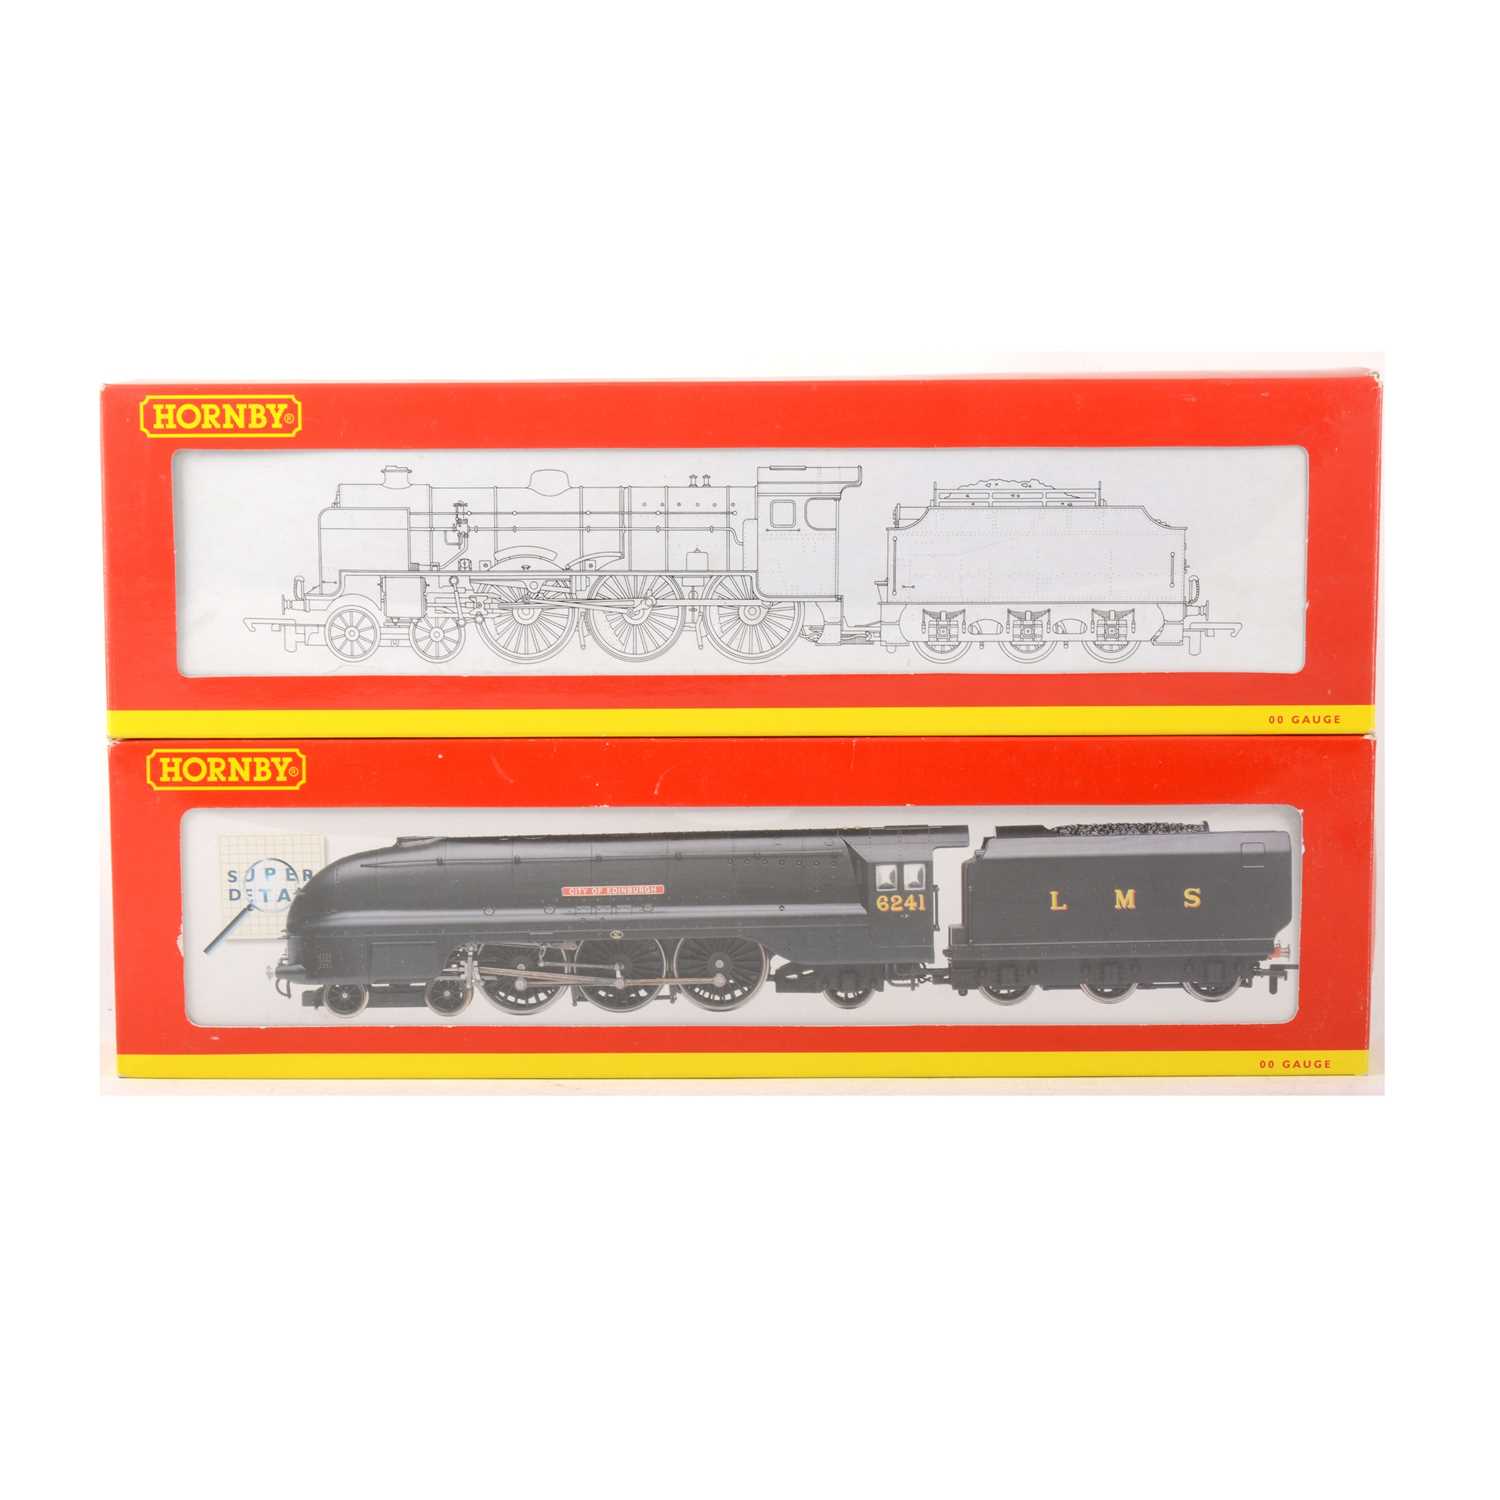 Lot 510 - Two Hornby OO gauge model railway locomotives, R2270 and R2208.